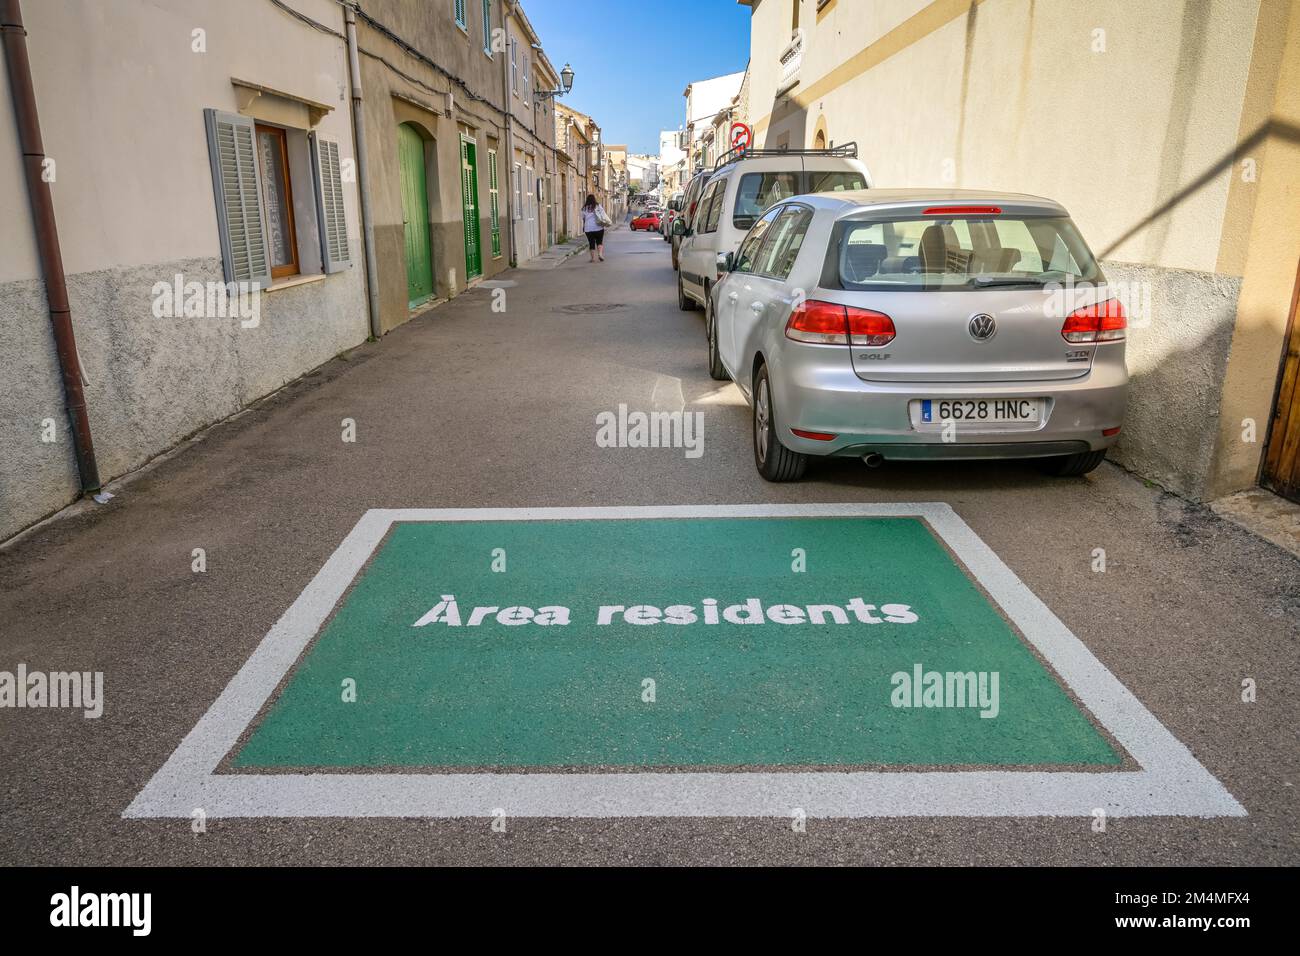 Straße, Bemalung, Anwohnerparkzone, Area residents, Arta, Mallorca, Spanien Stock Photo